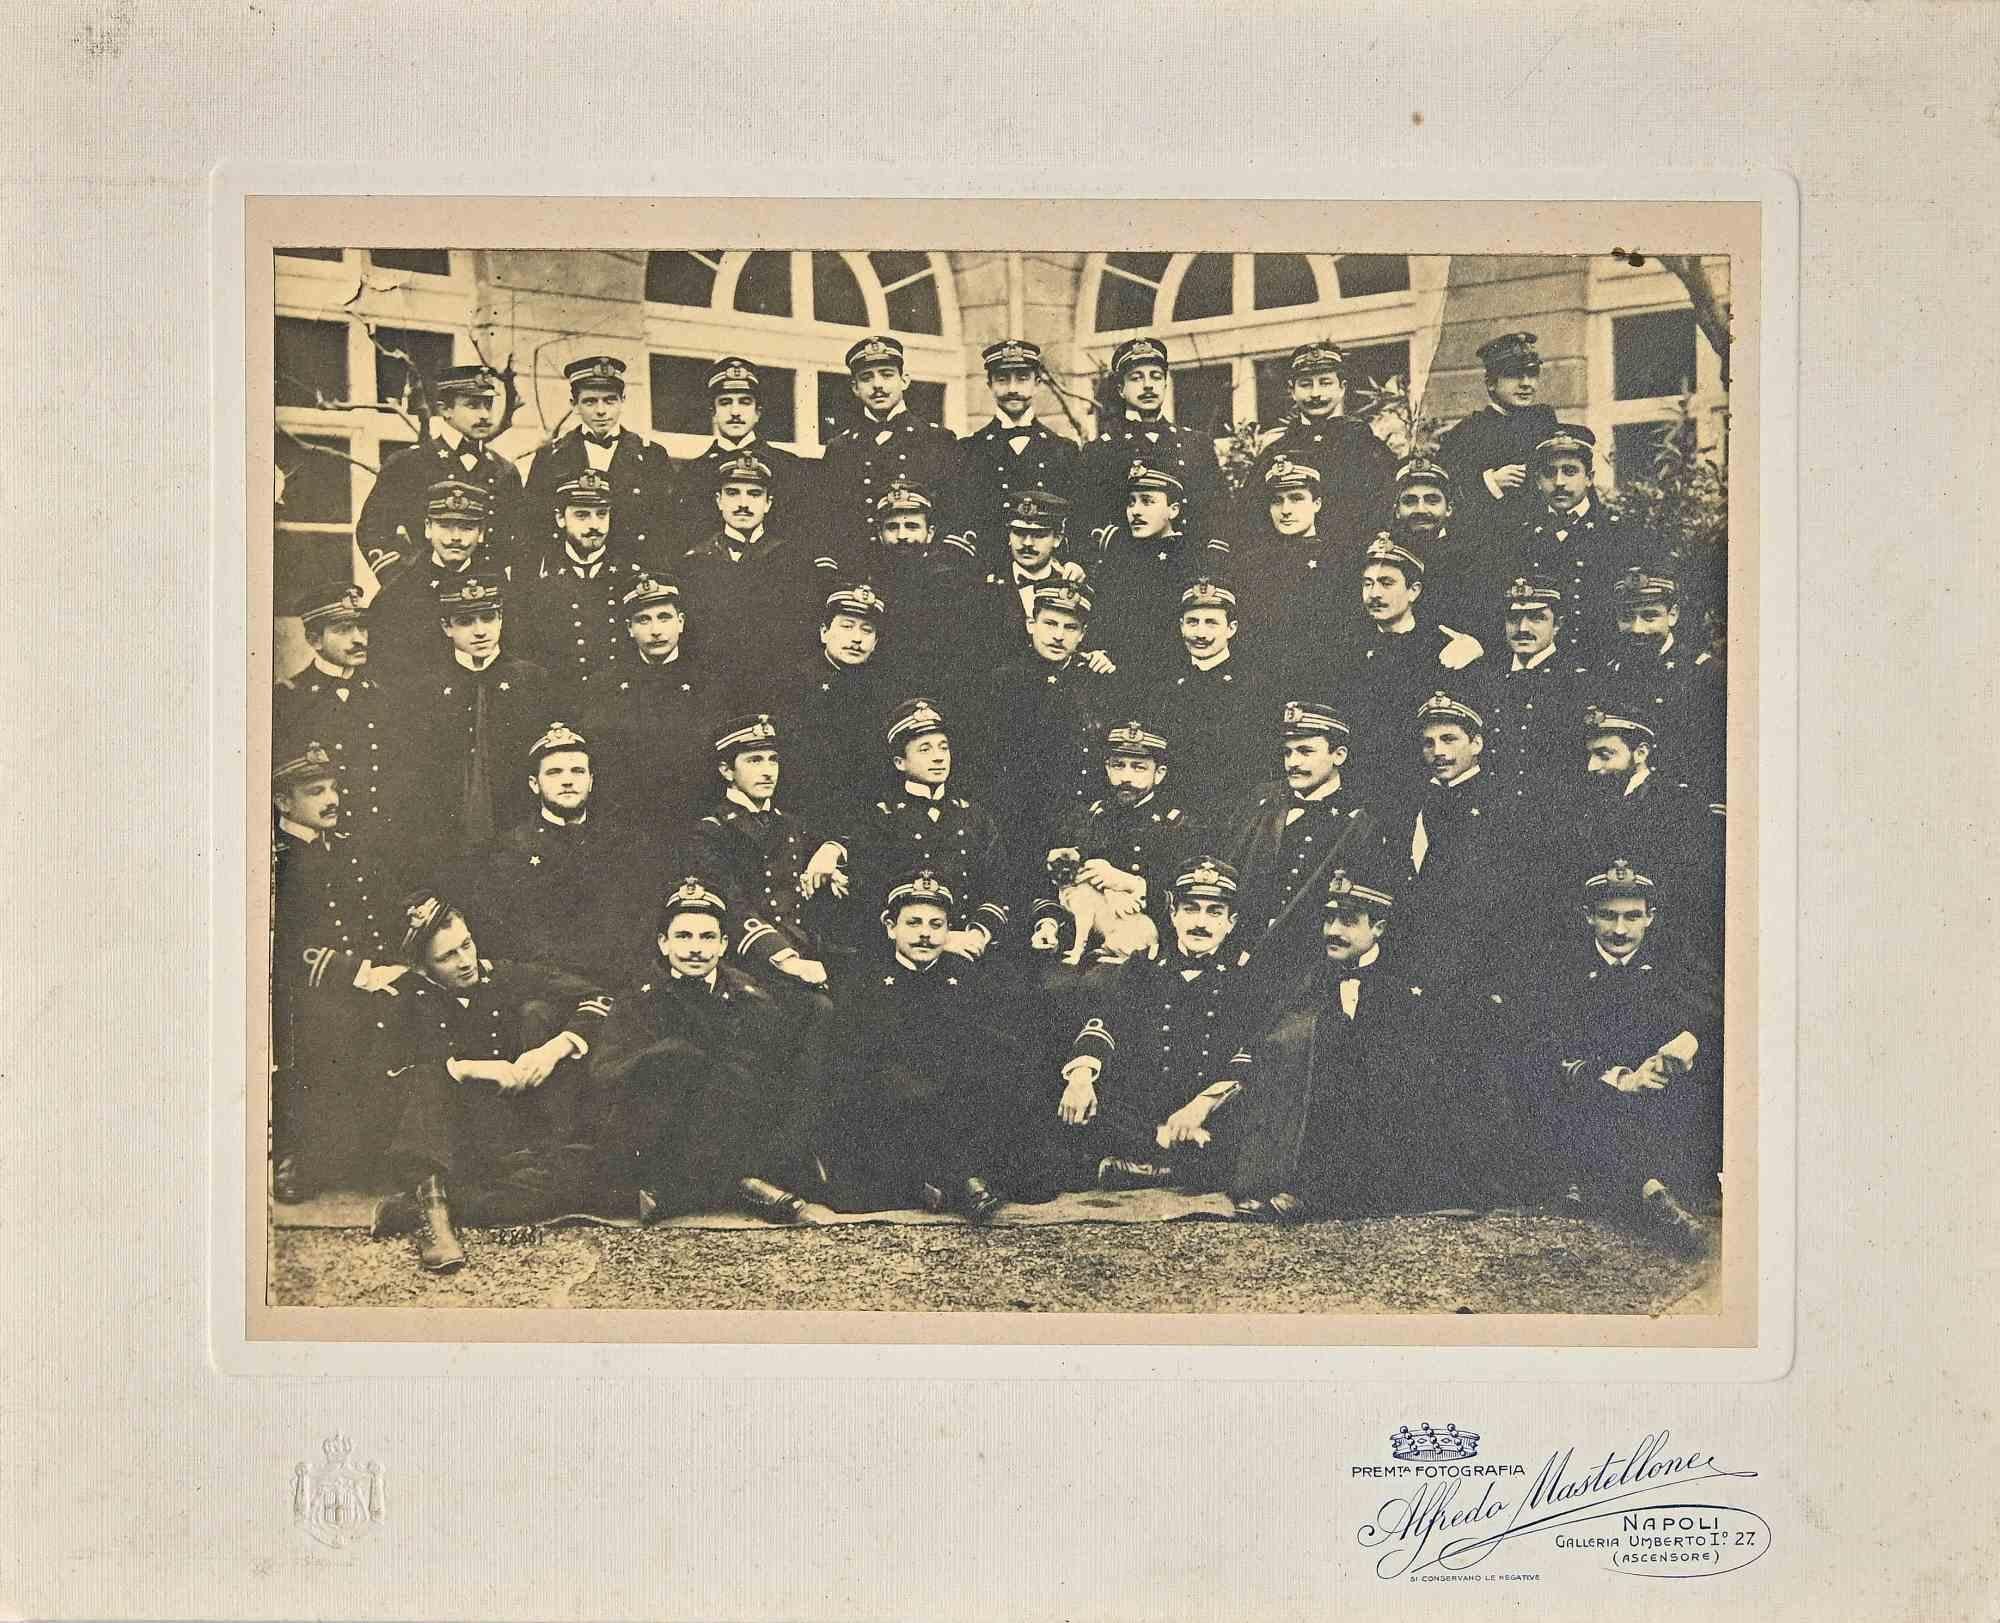 Alfredo Mastellone Figurative Photograph - Groups of Sailormen - Original Photograph by A. Mastellone - Early 20th Century 